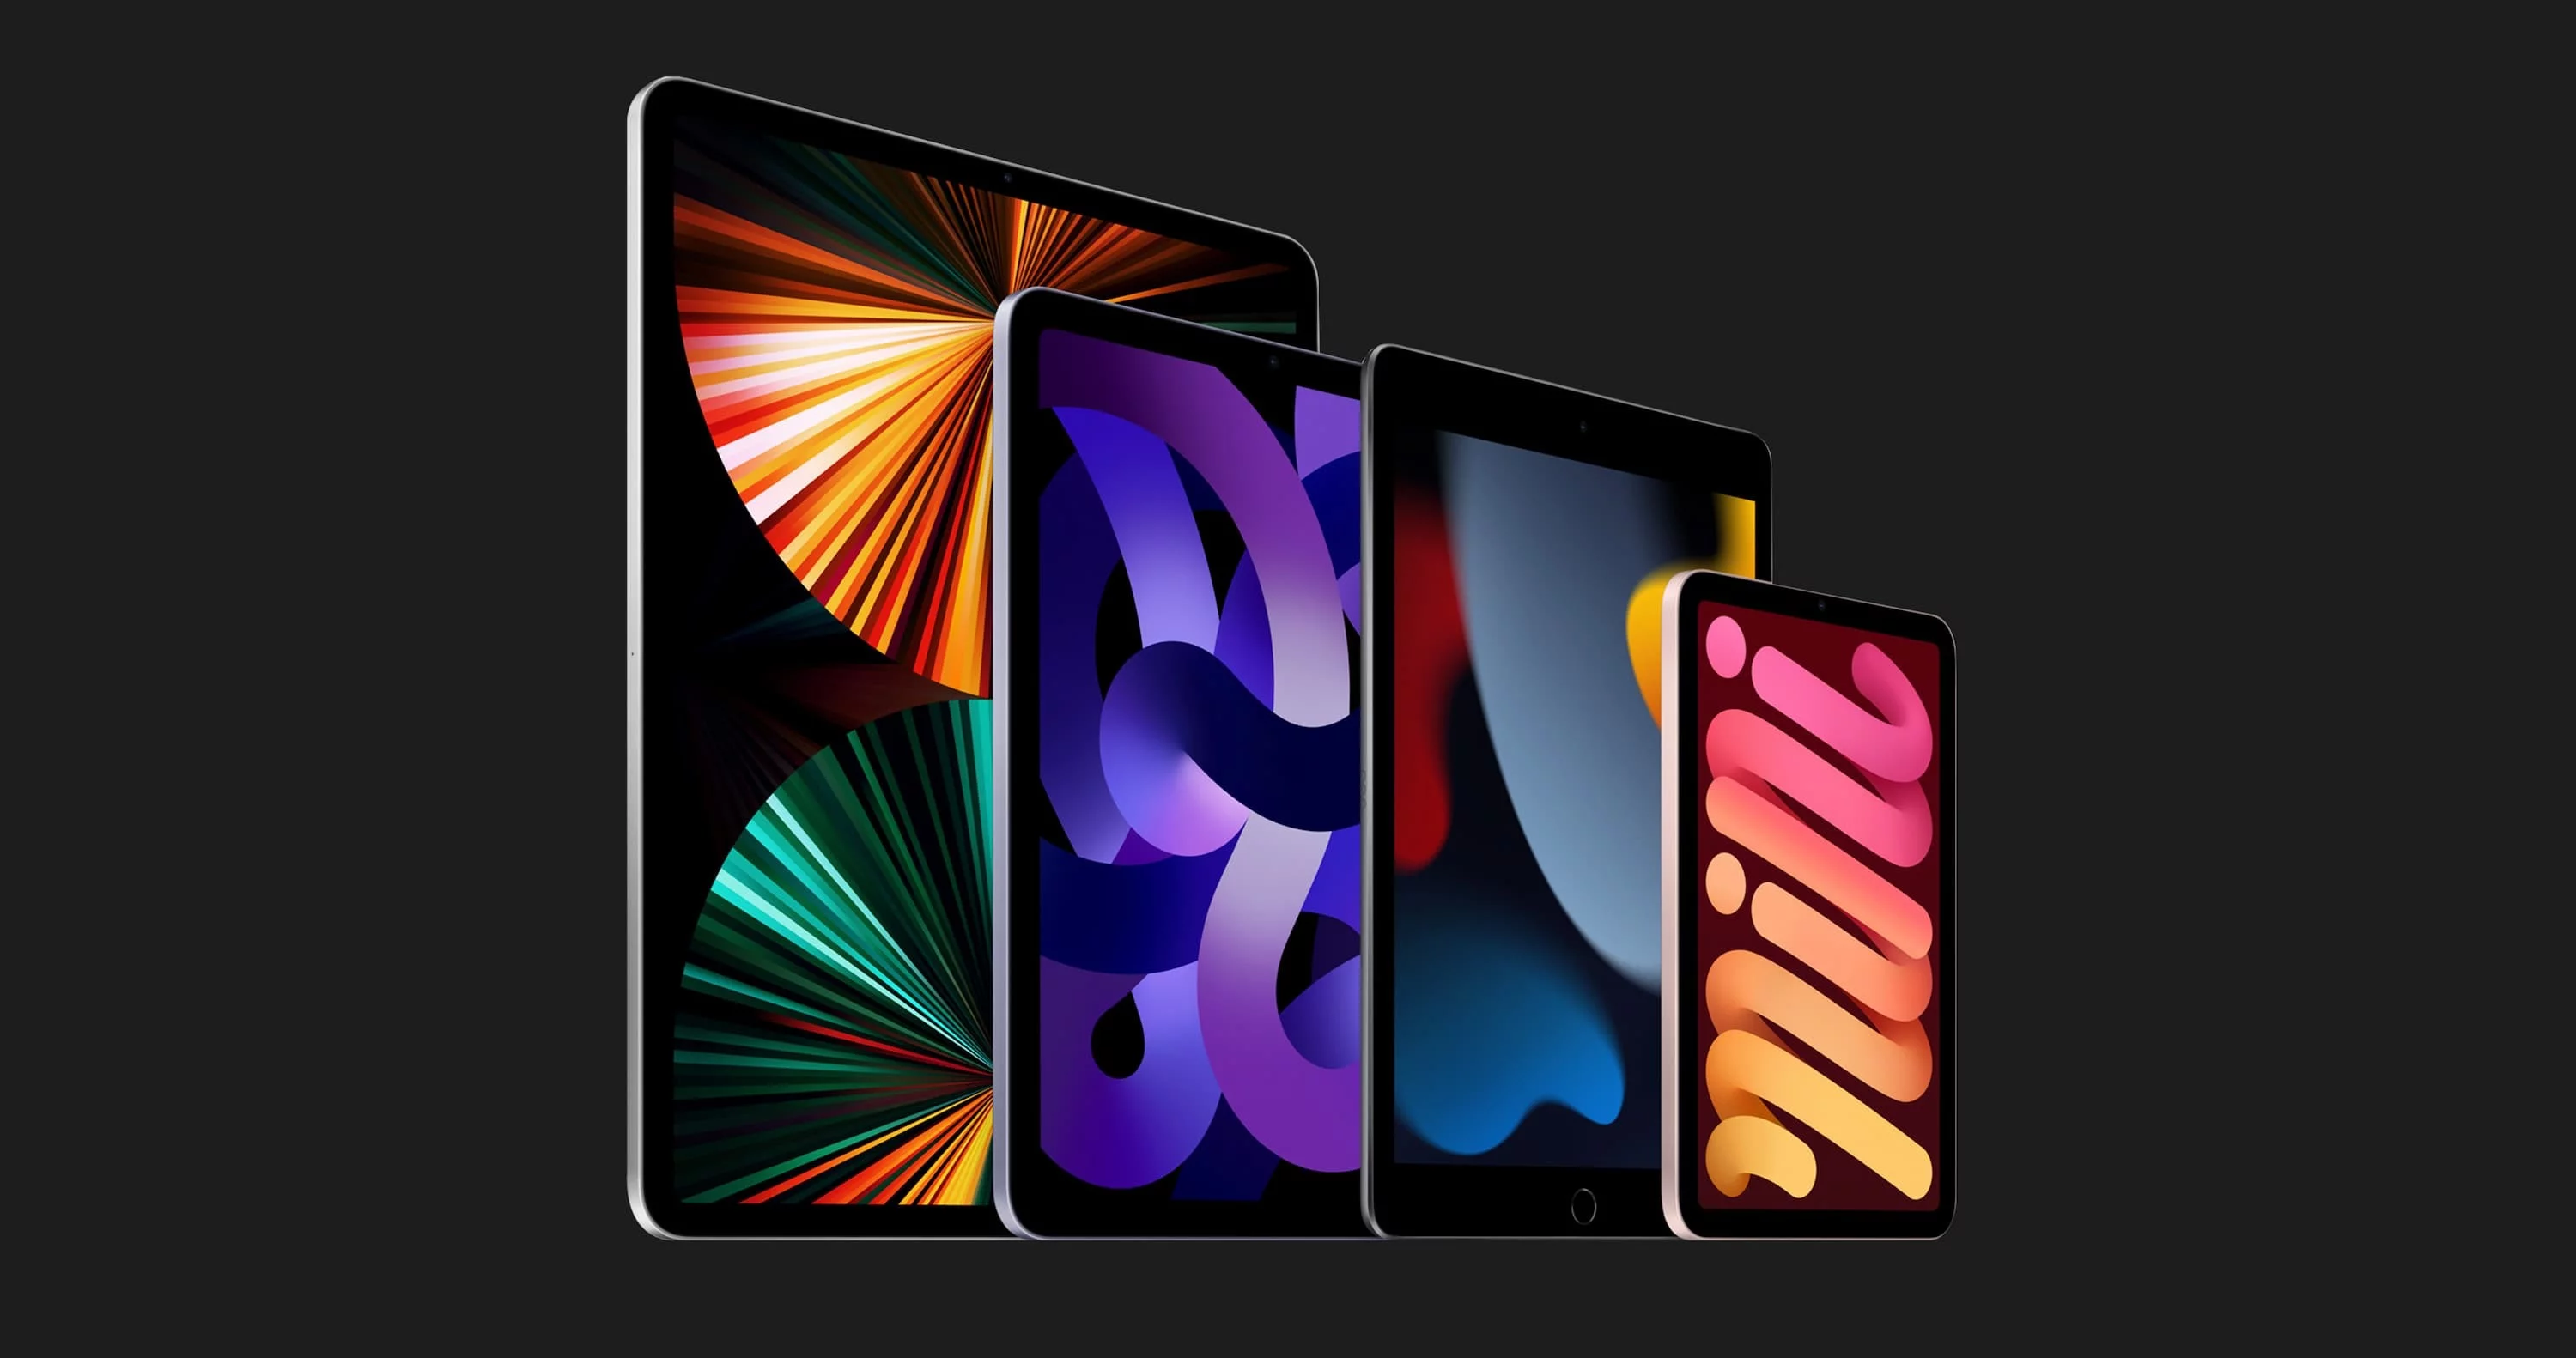 б/у Apple iPad 32GB, Wi-Fi + LTE, Space Gray (2018)